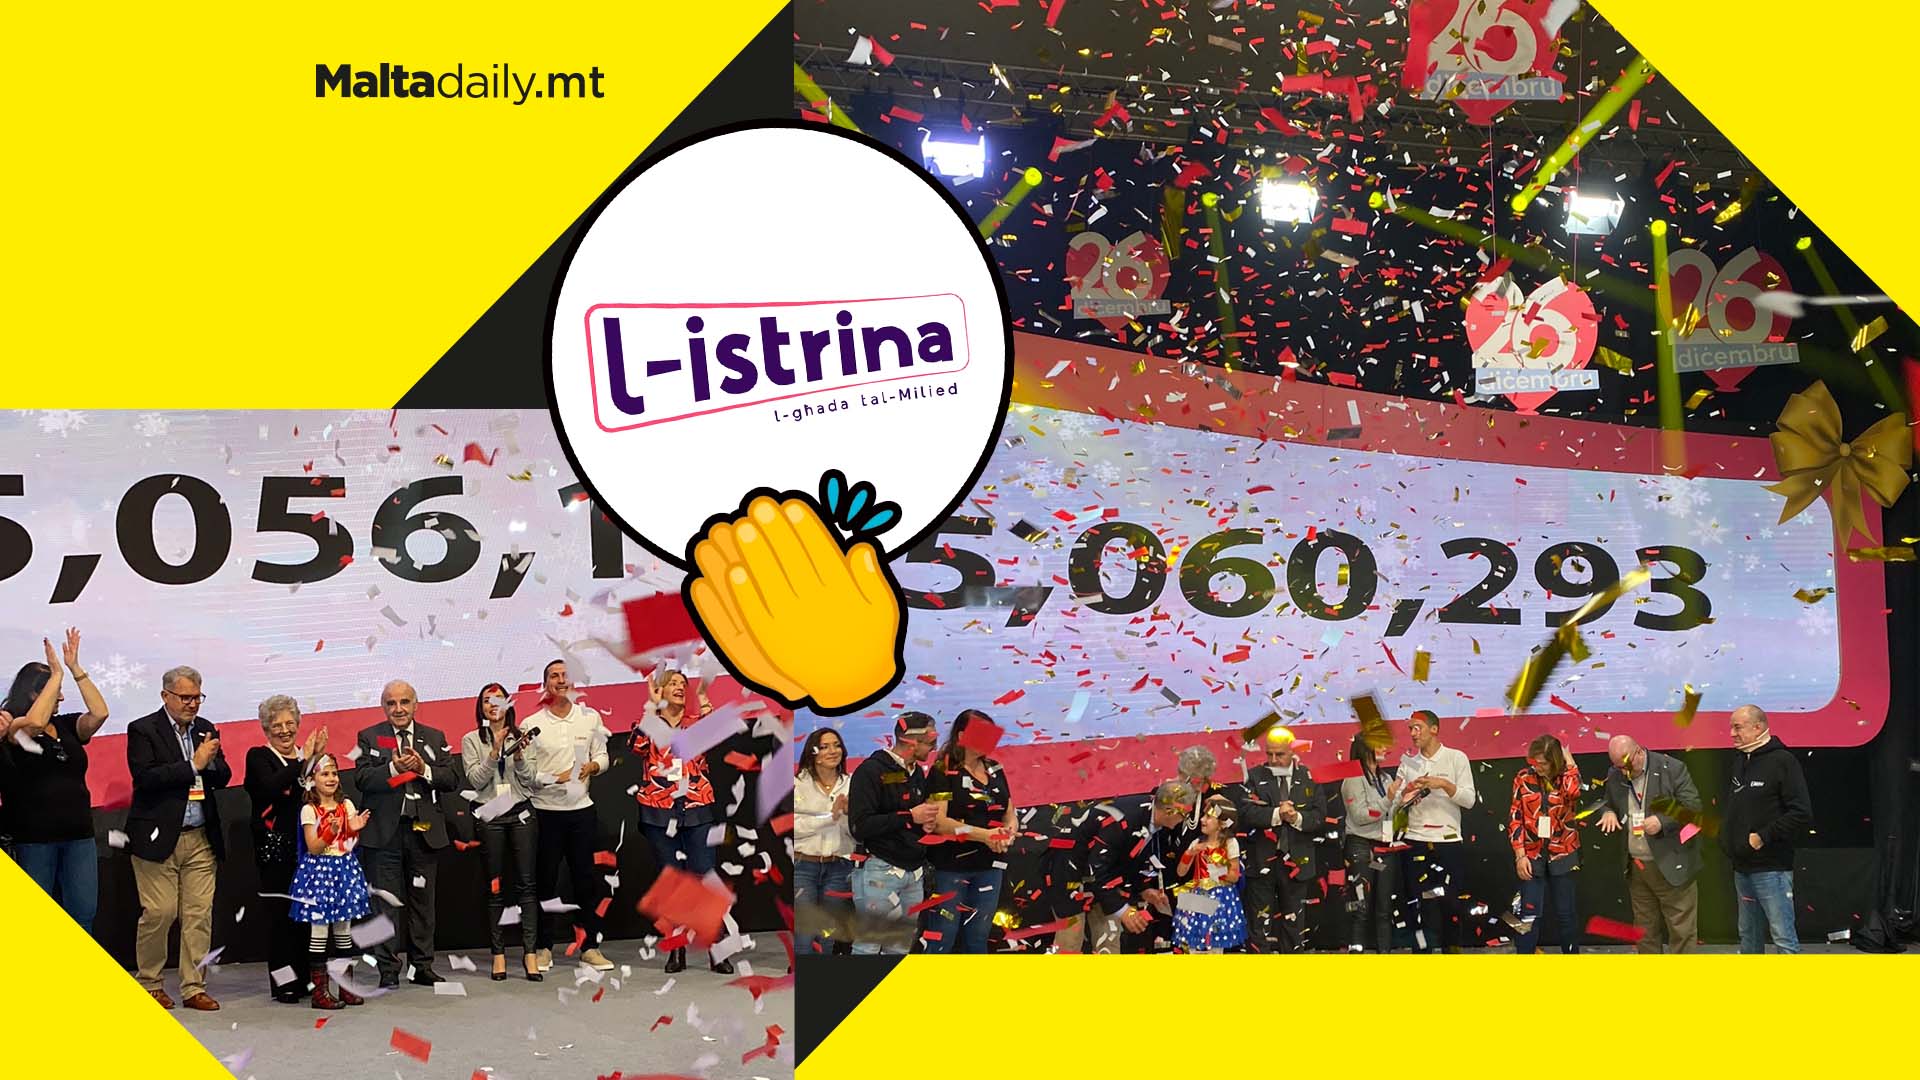 Sum of €5,062,415 raised for l-Istrina 2022.